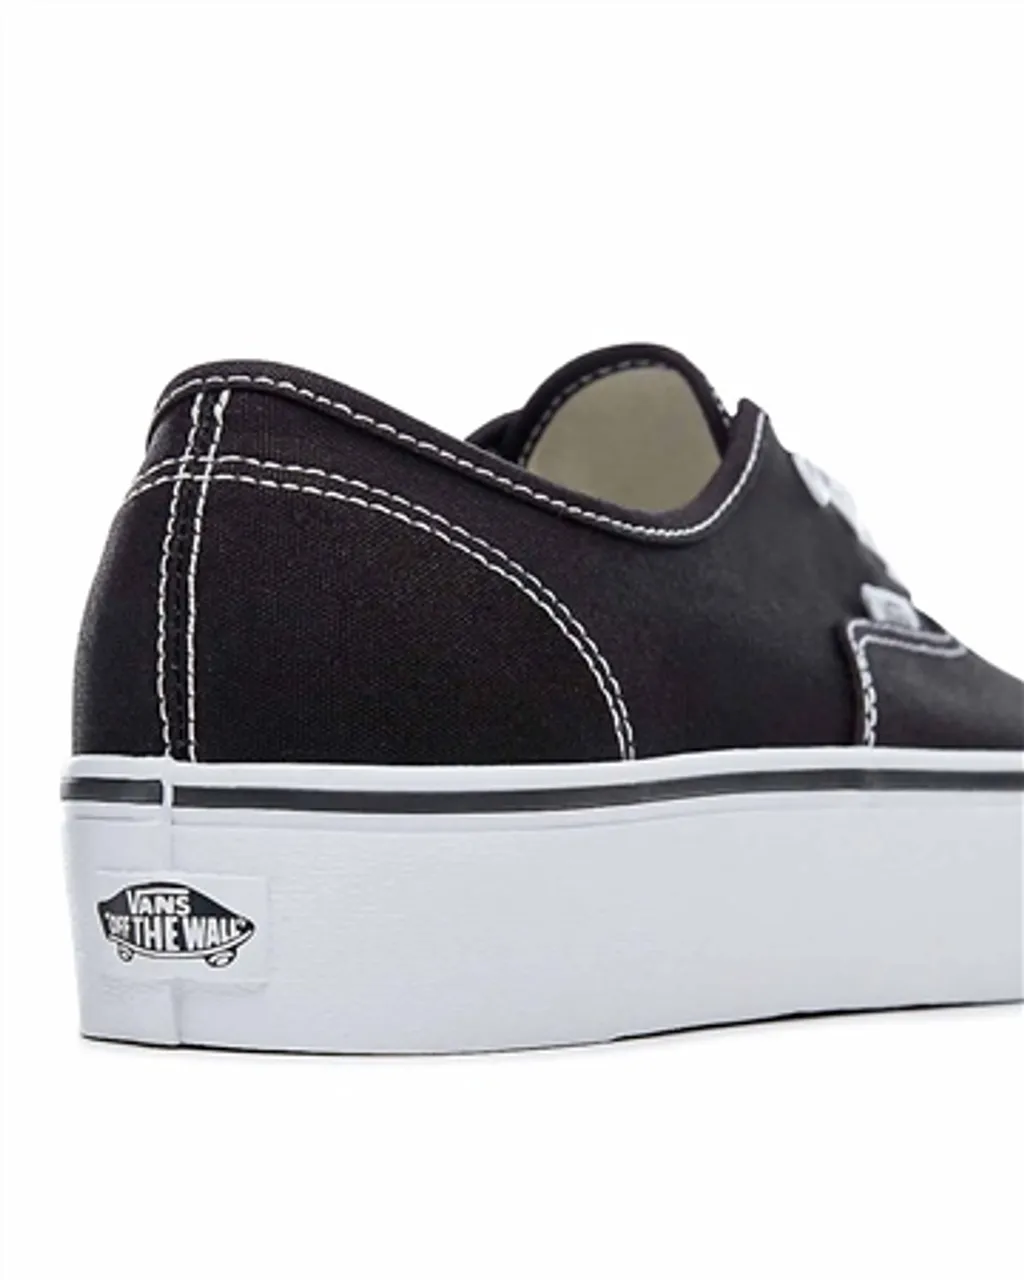 Vans Auth Platform 2 Shoes - Black - UK 4 (EU 36.5)